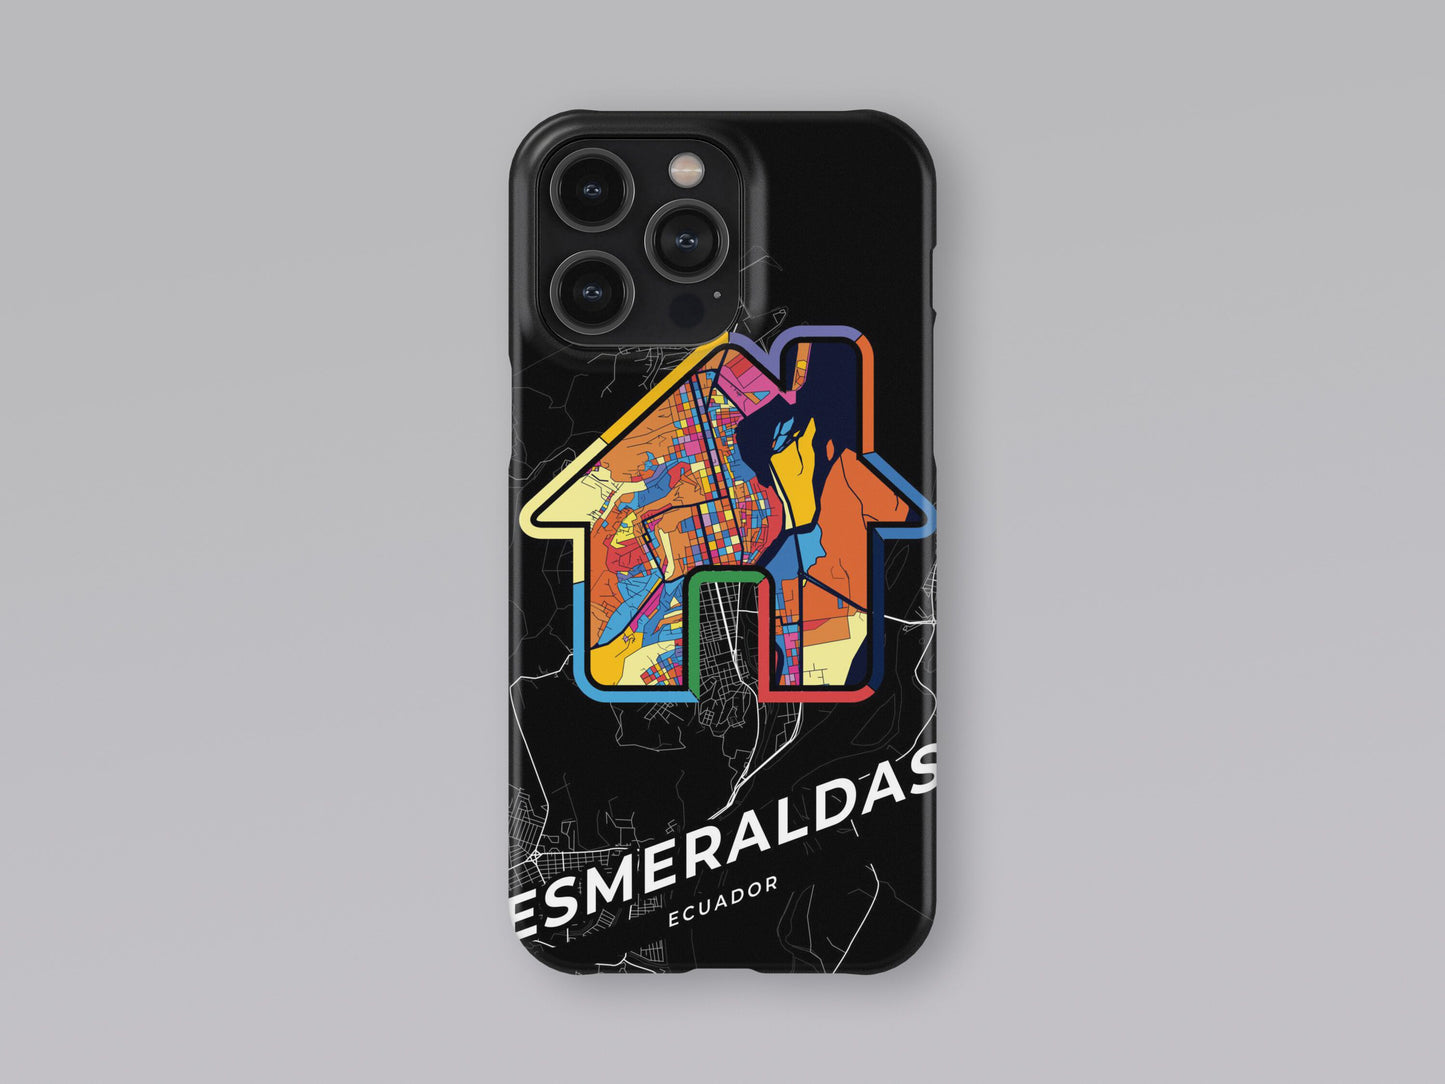 Esmeraldas Ecuador slim phone case with colorful icon. Birthday, wedding or housewarming gift. Couple match cases. 3